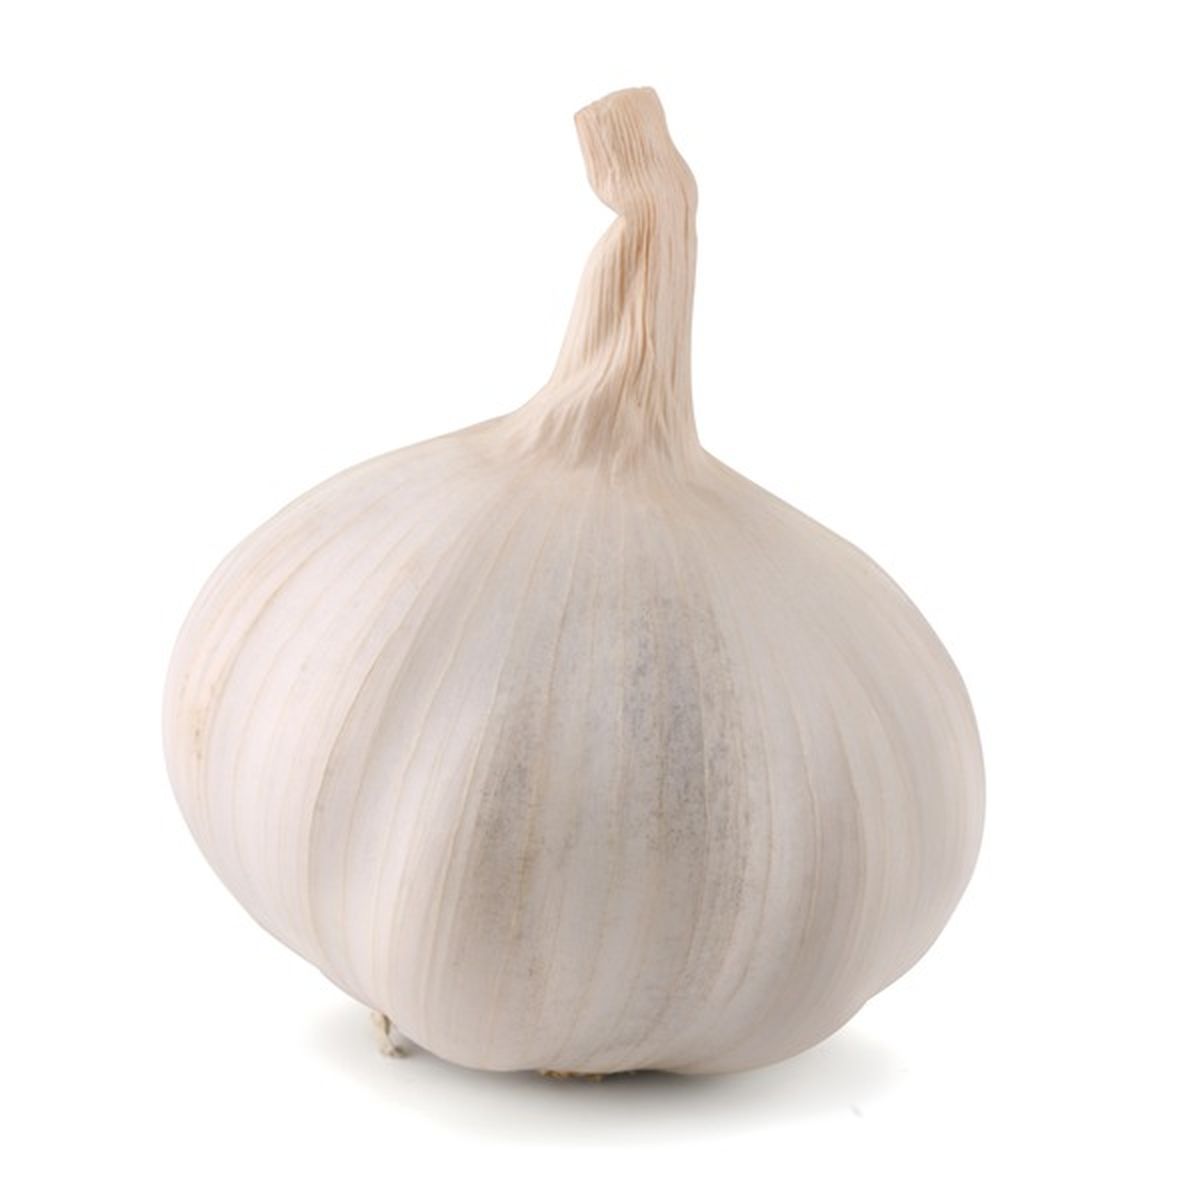 of garlic